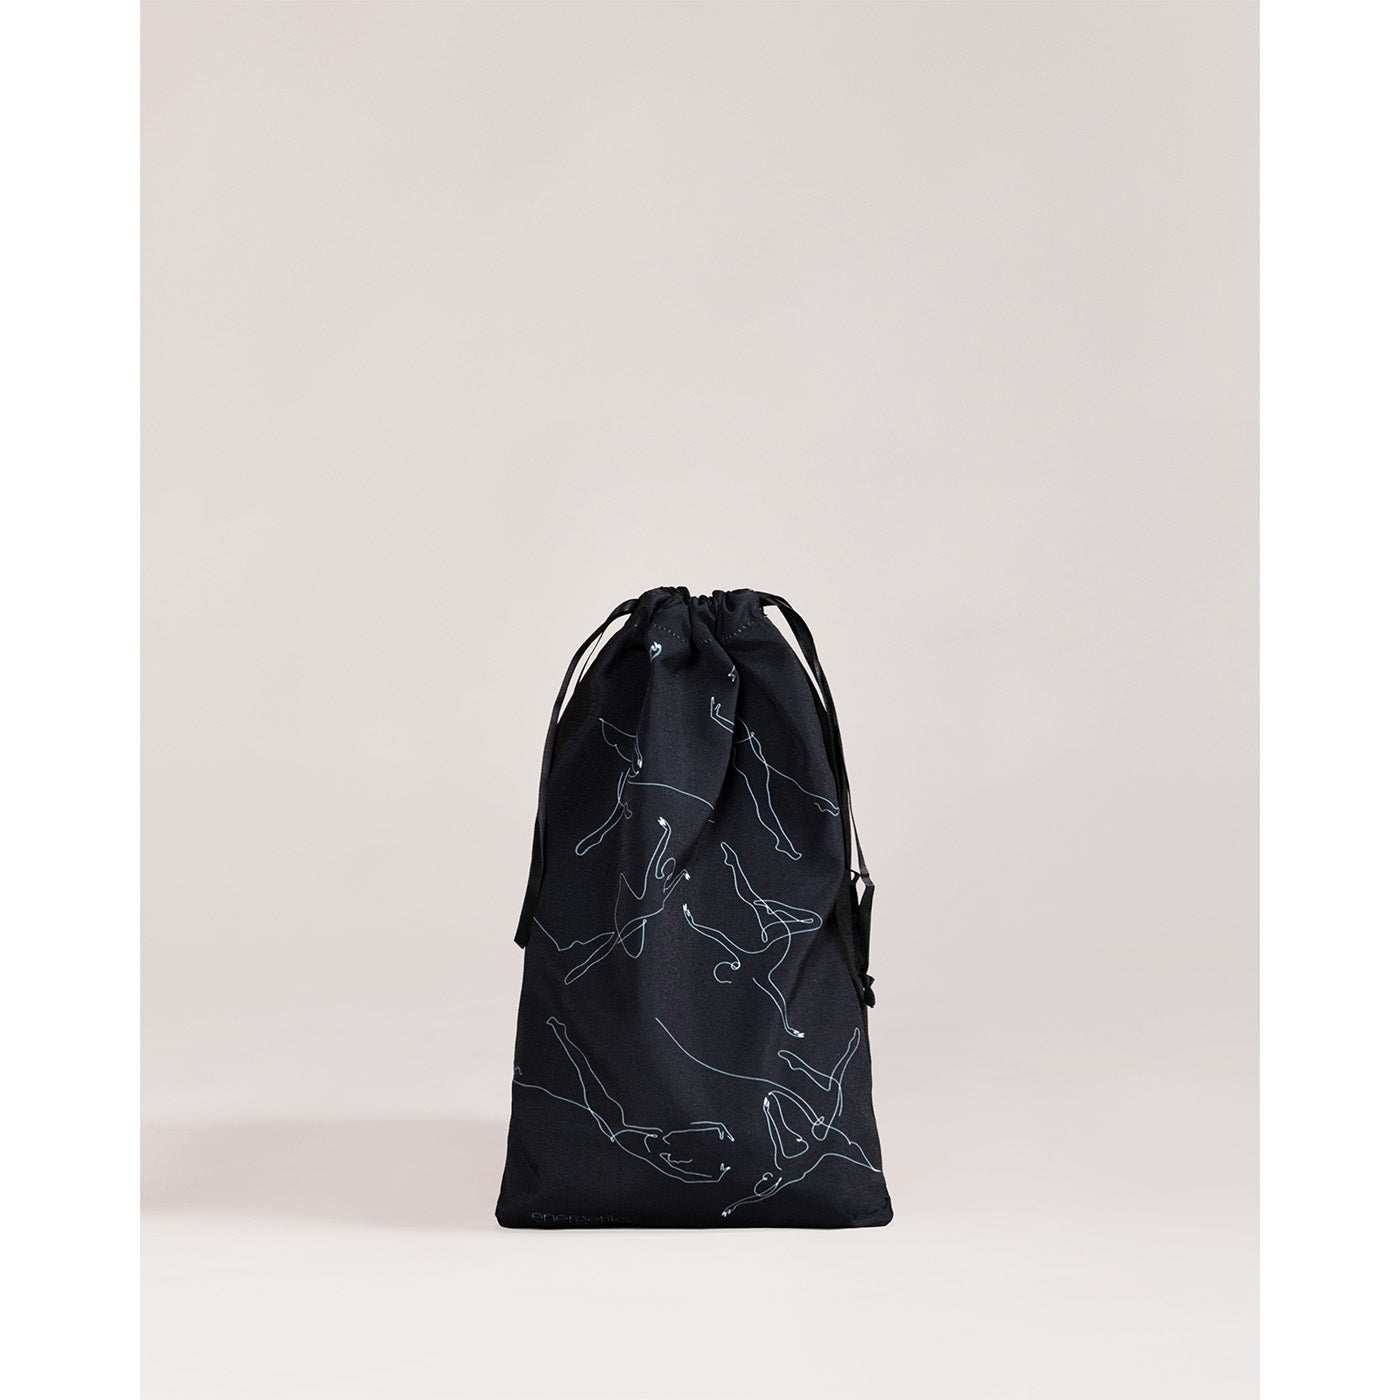 Dance Shoe Bag - Black (5 Designs)